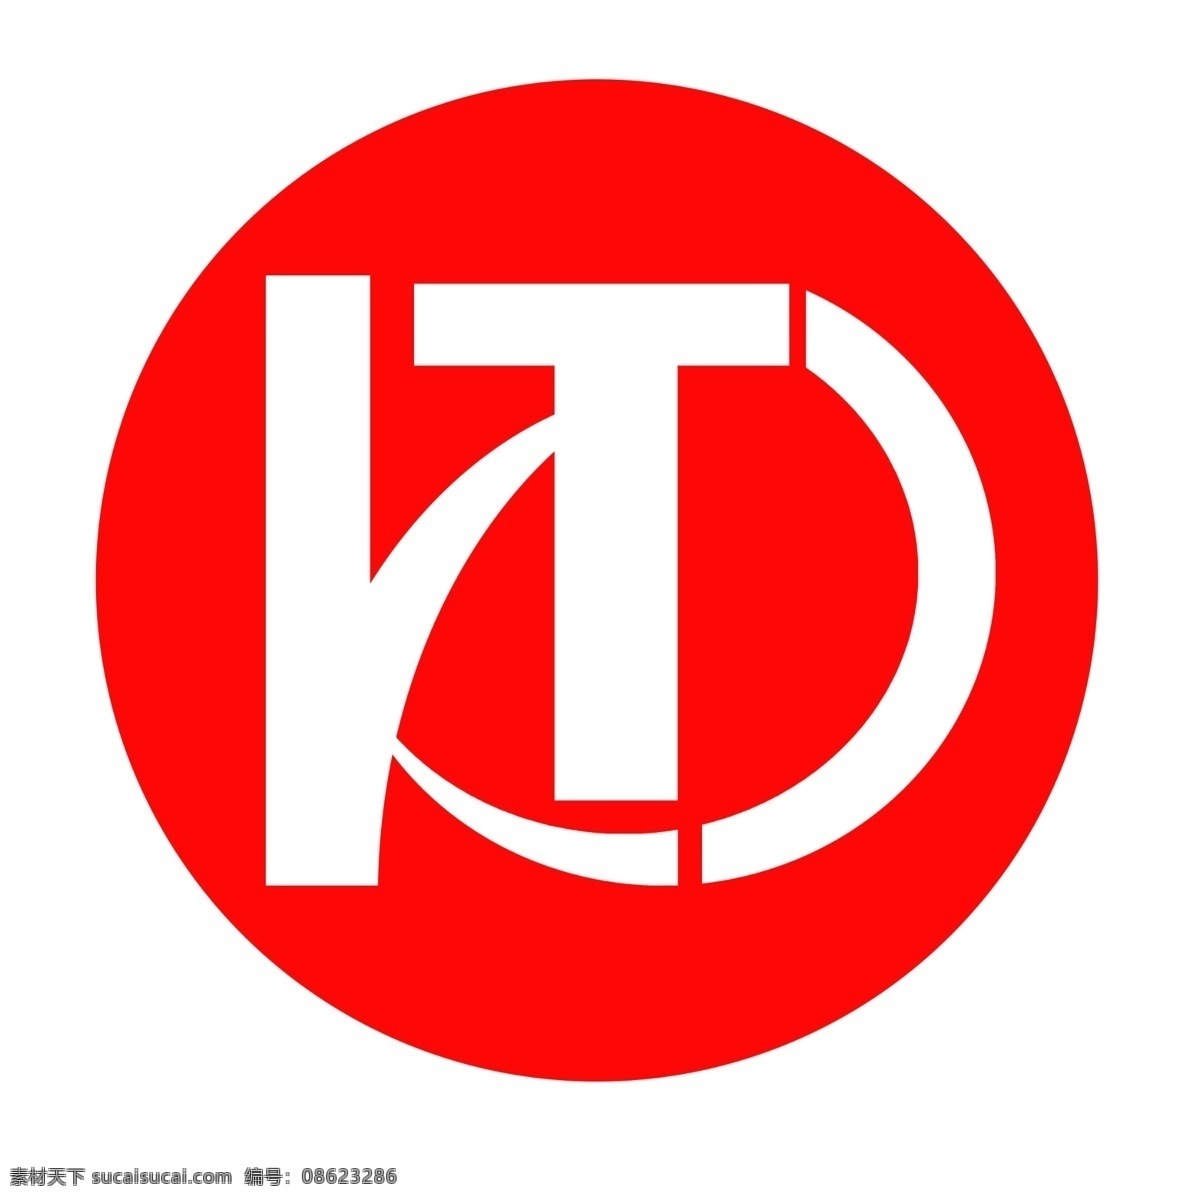 ht标志 htlogo 企业标志 th标志 企业标识